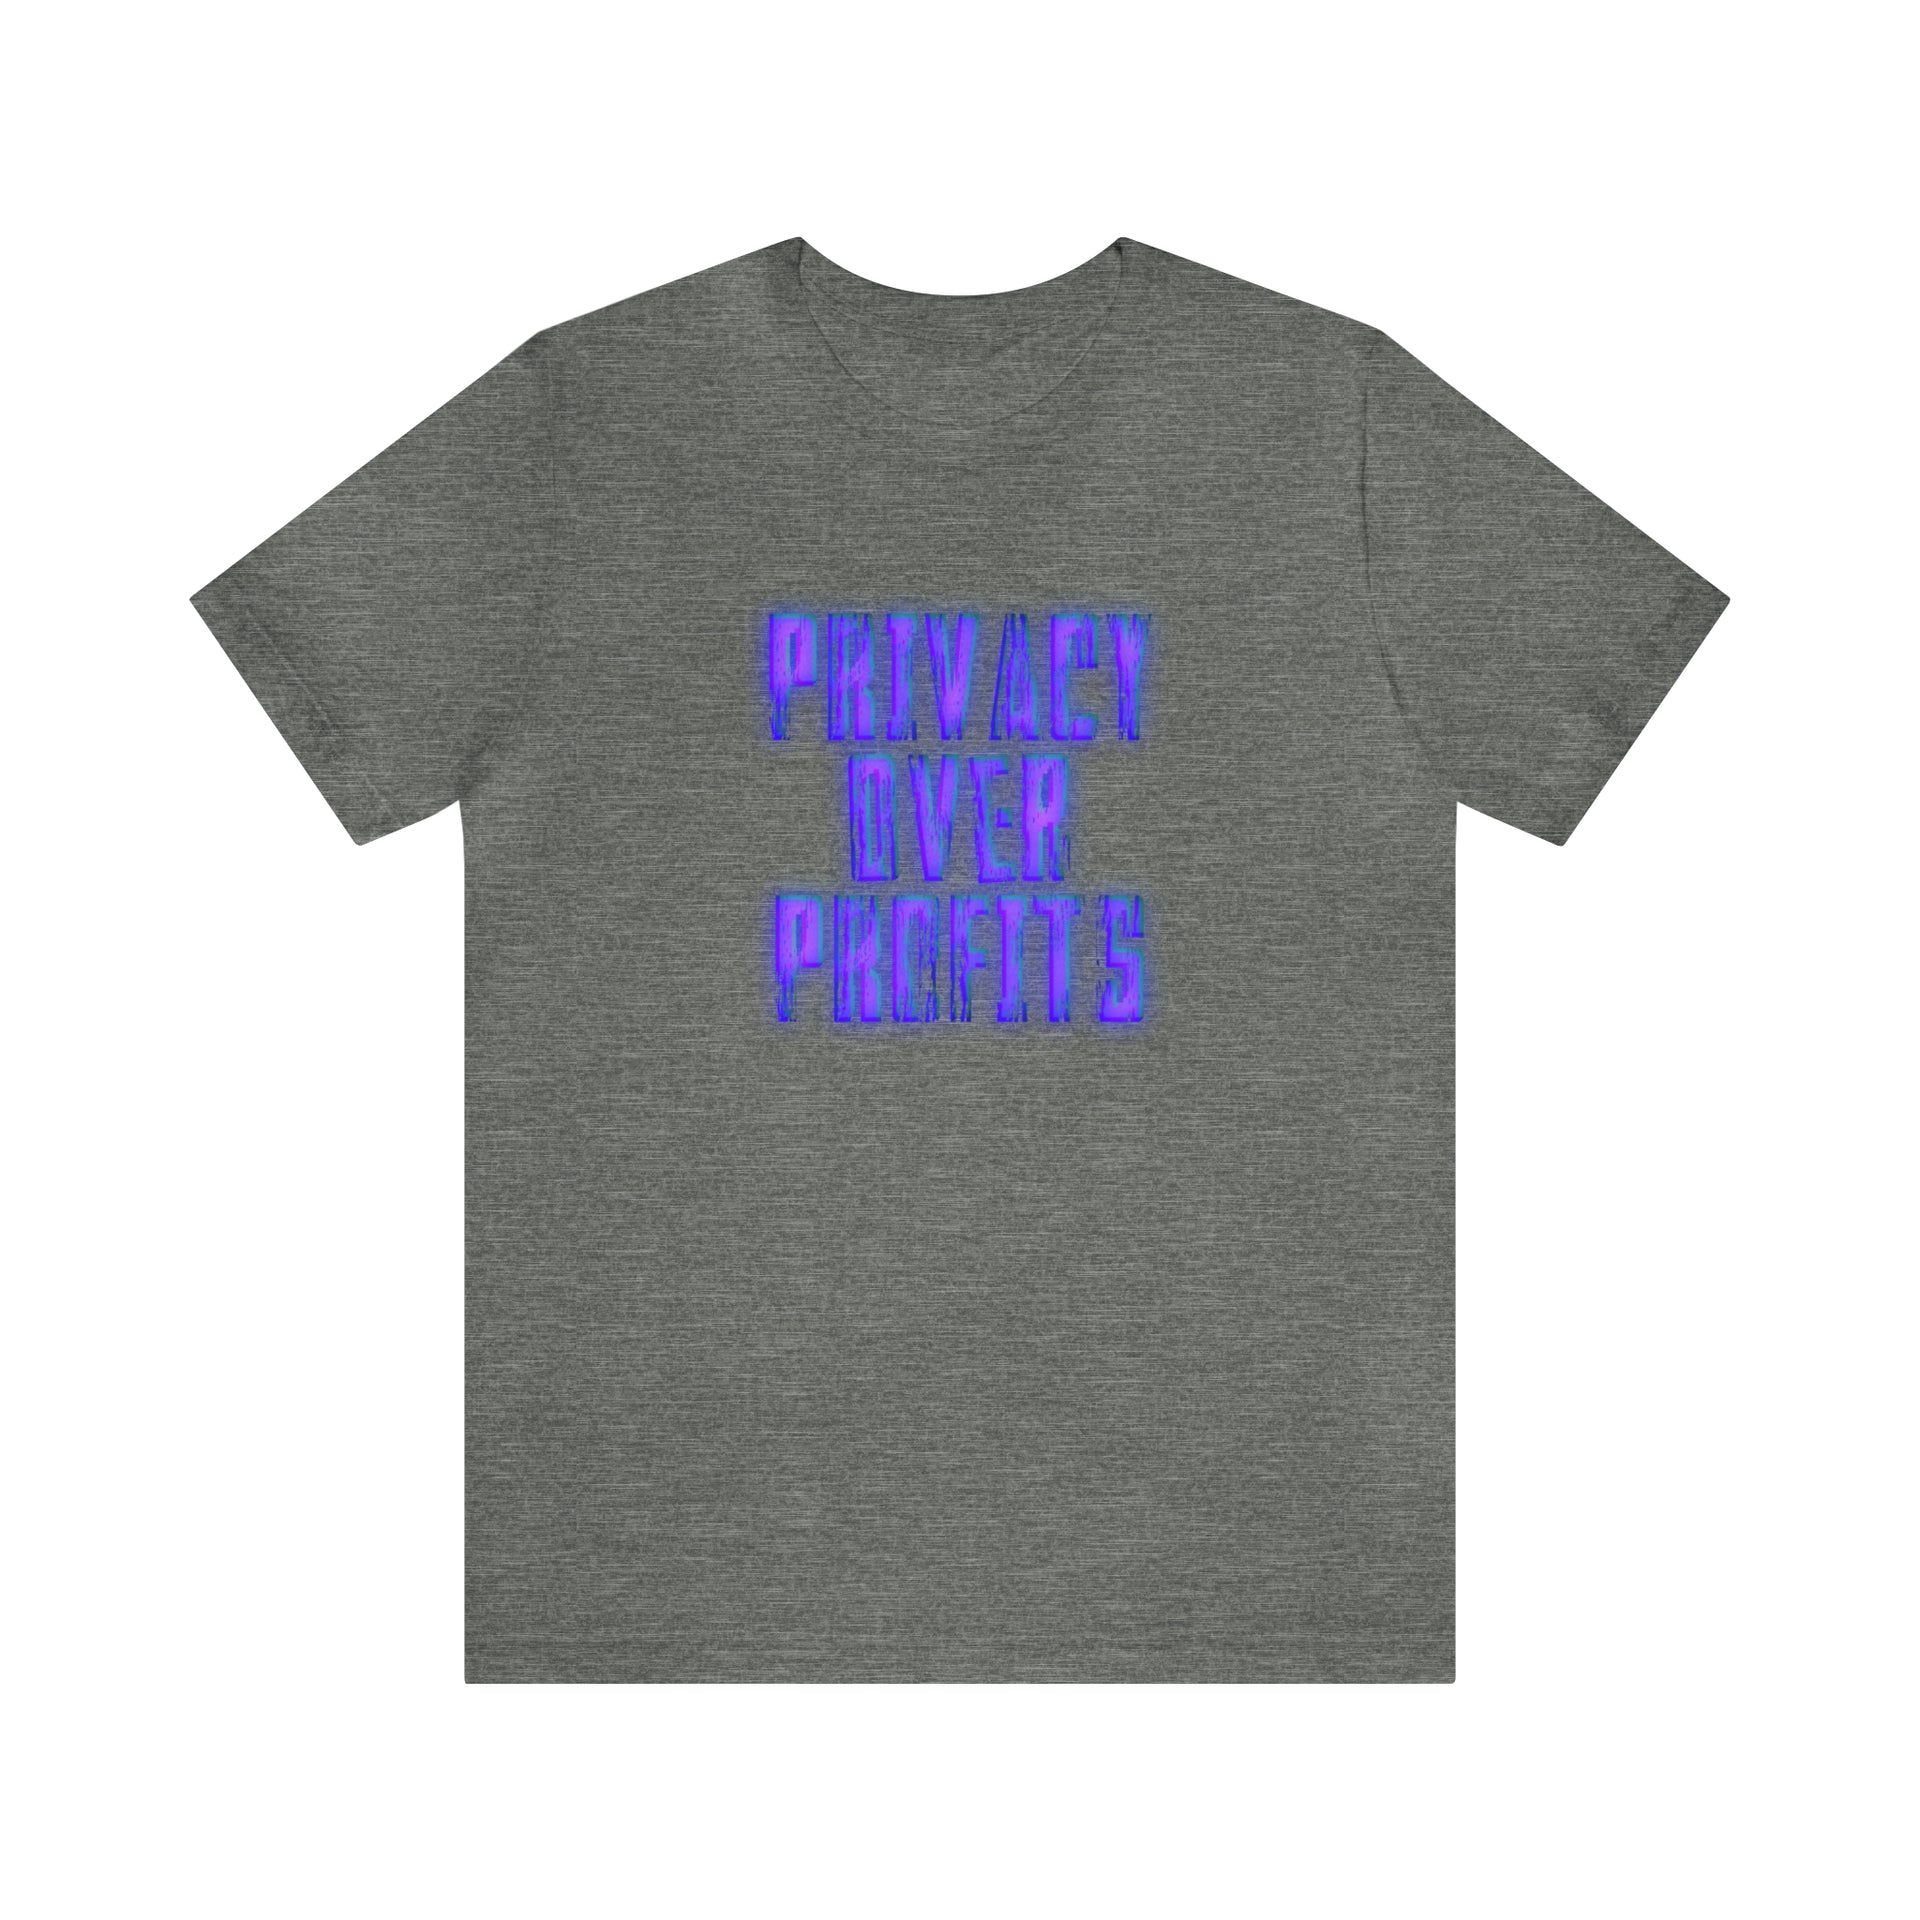 Privacy Over Profit (Unisex T-Shirt)